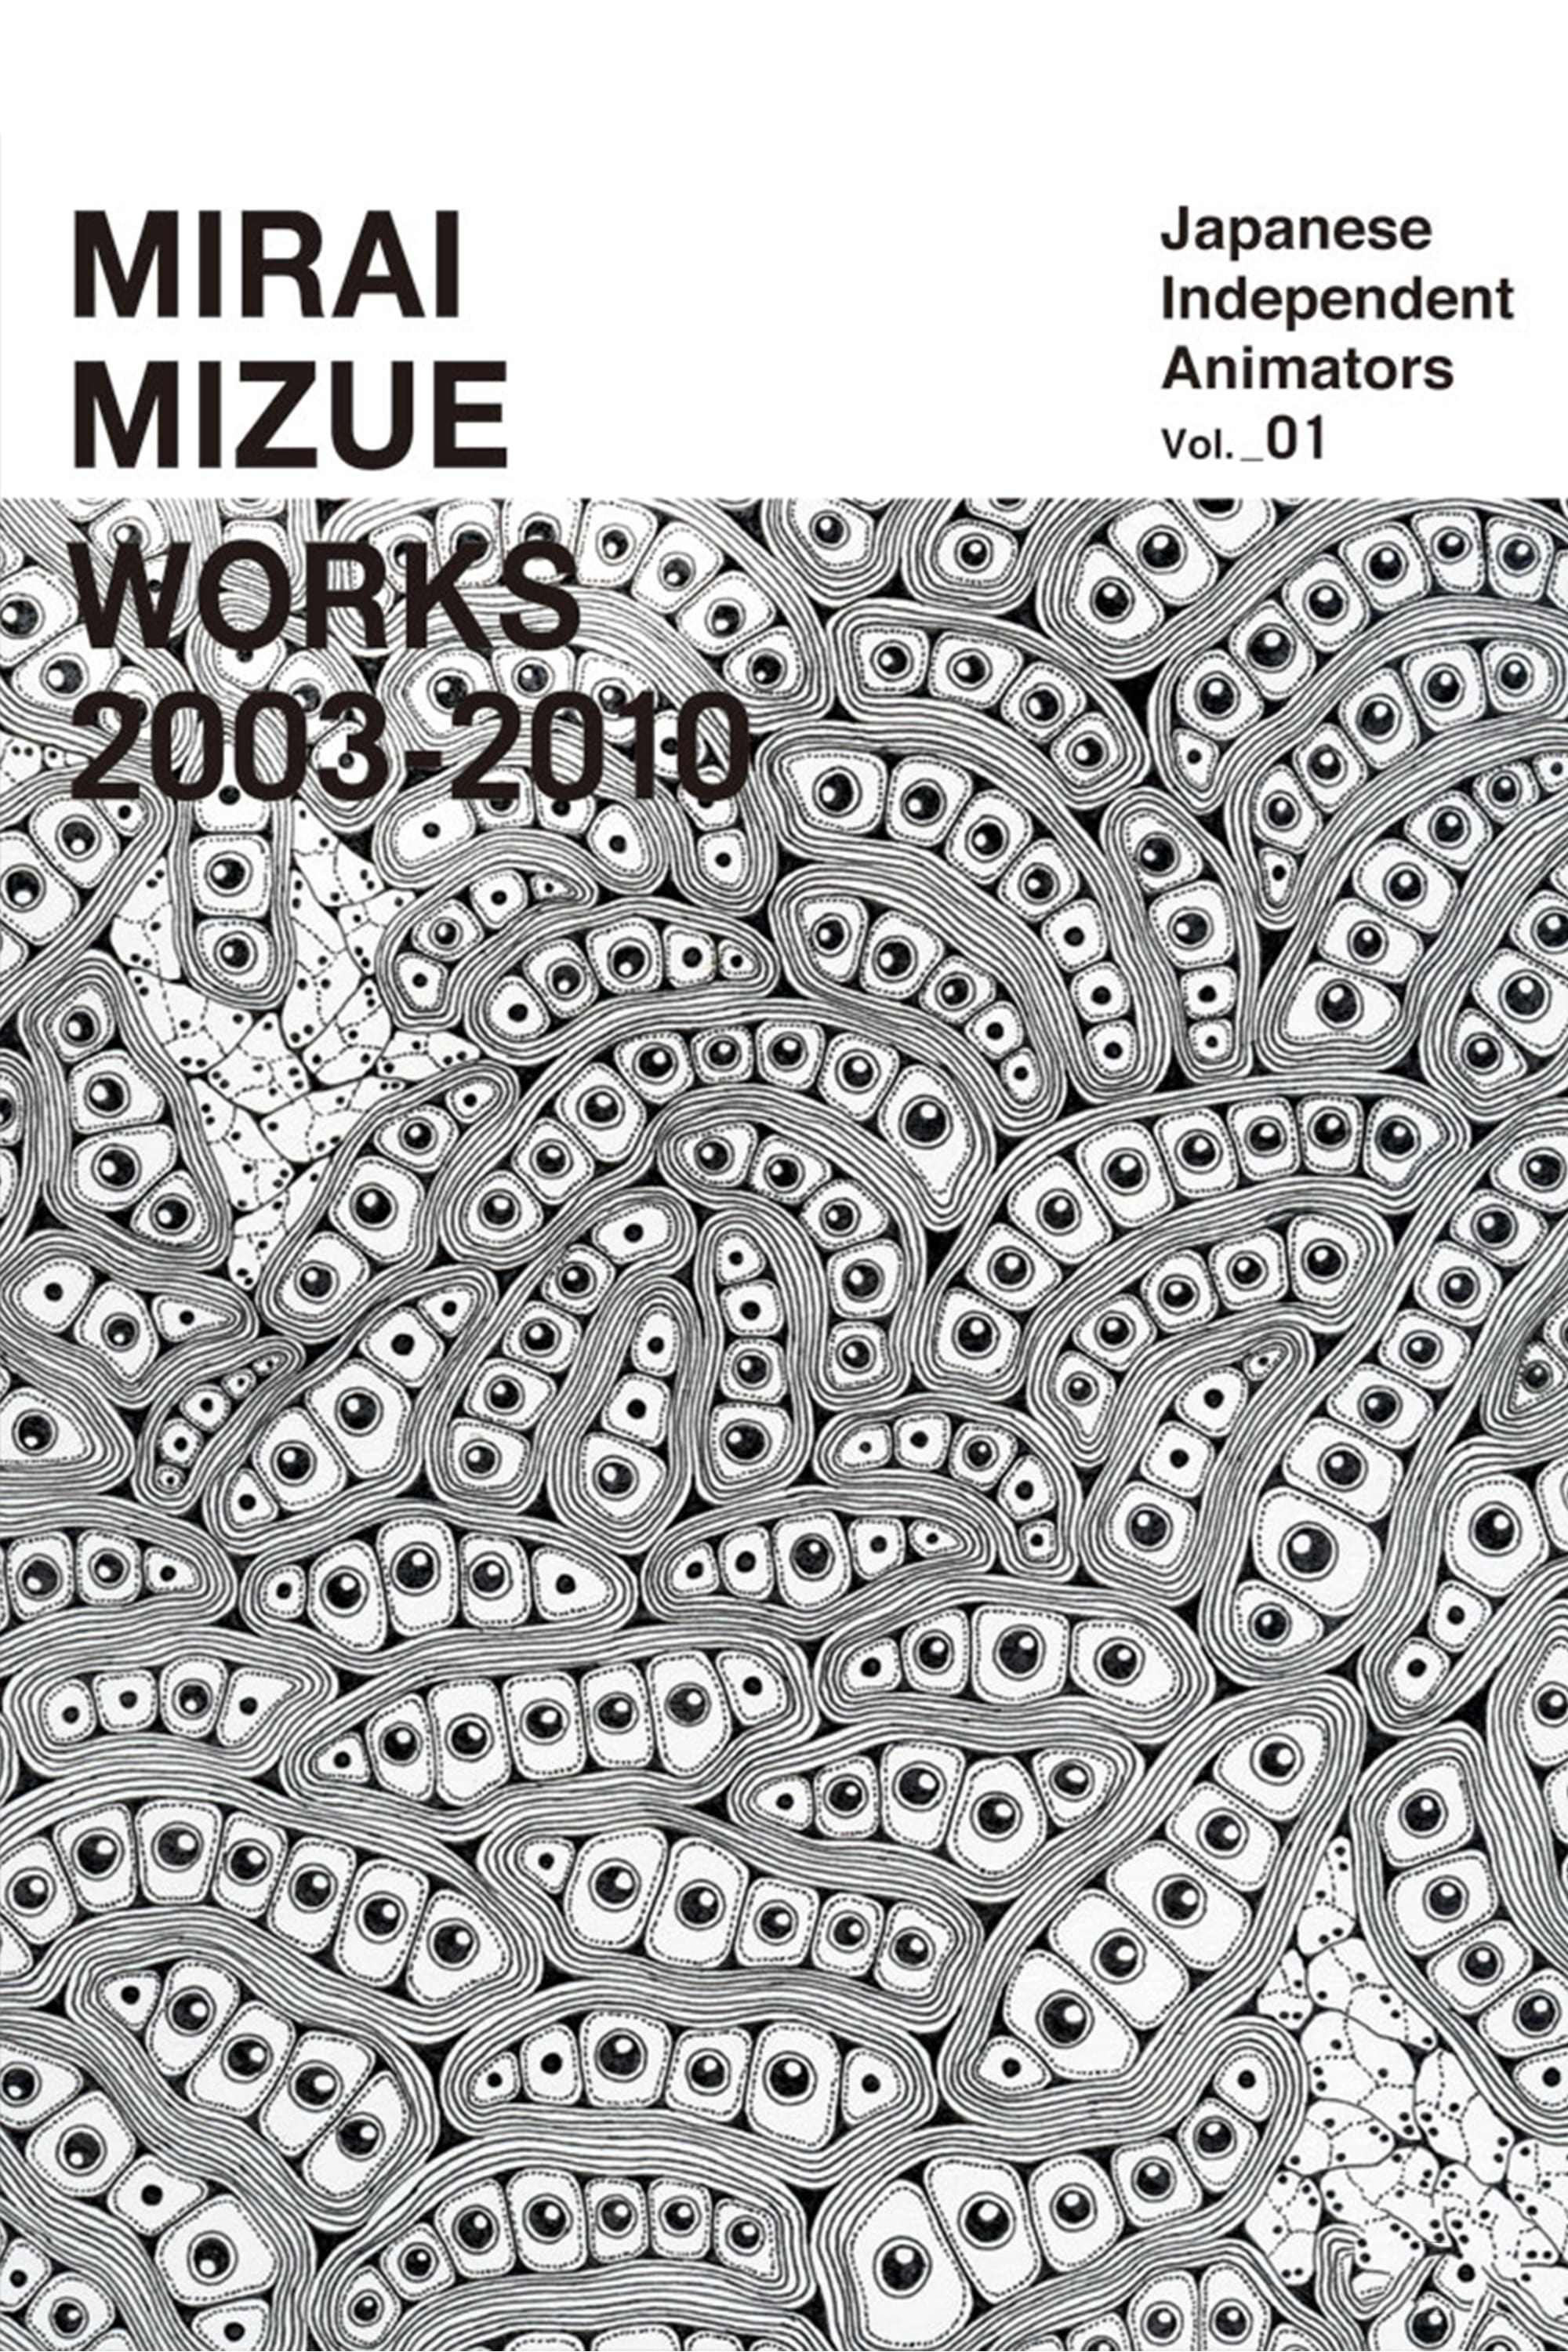 Mirai Mizue Works 2003-2010